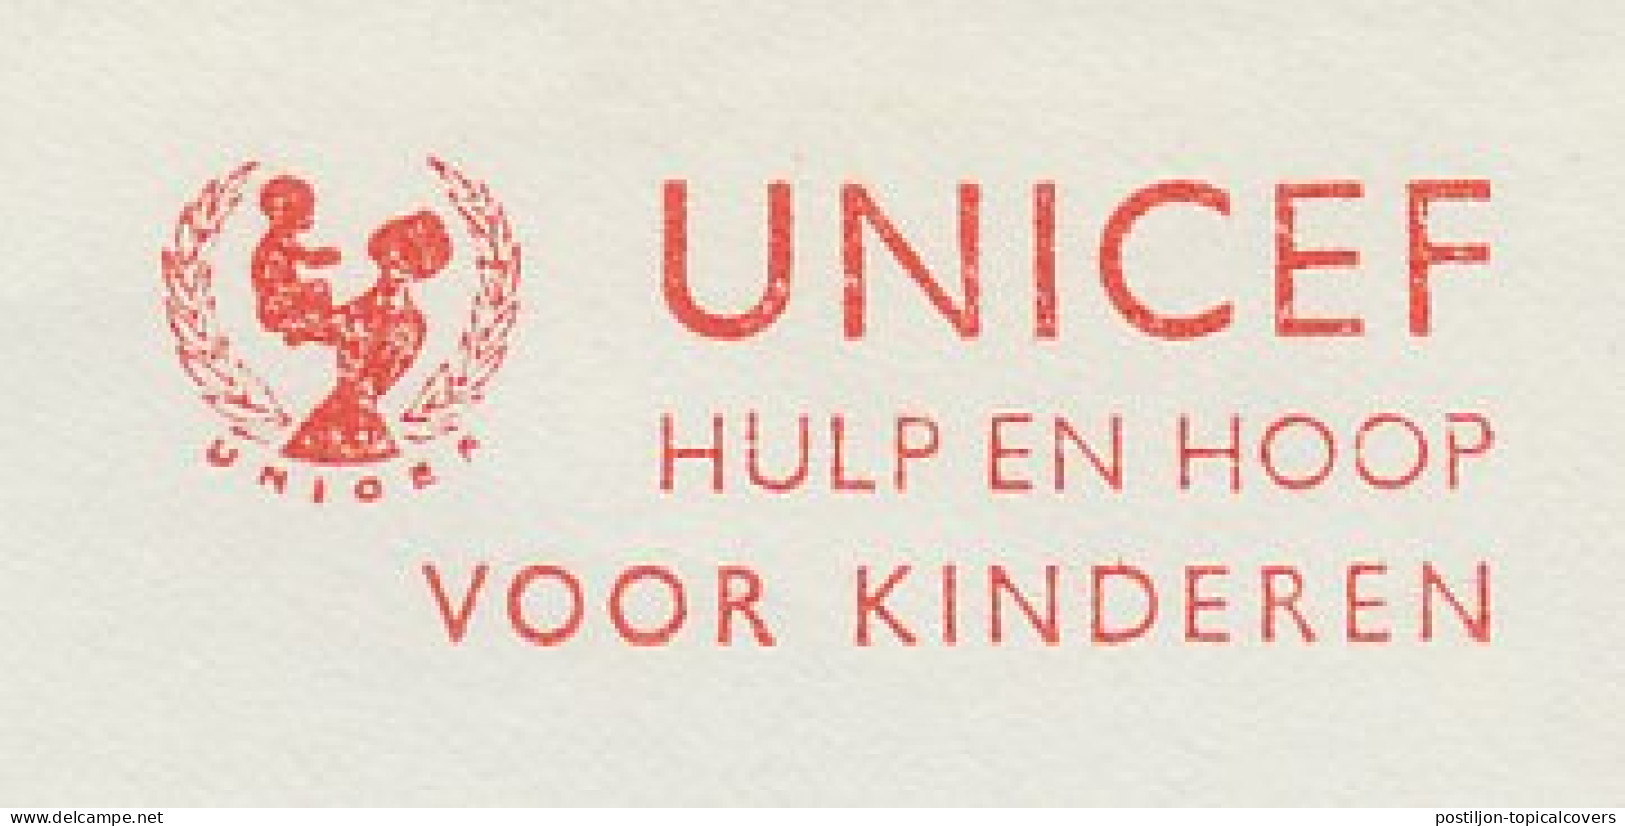 Meter Cut Netherlands 1964 UNICEF - ONU